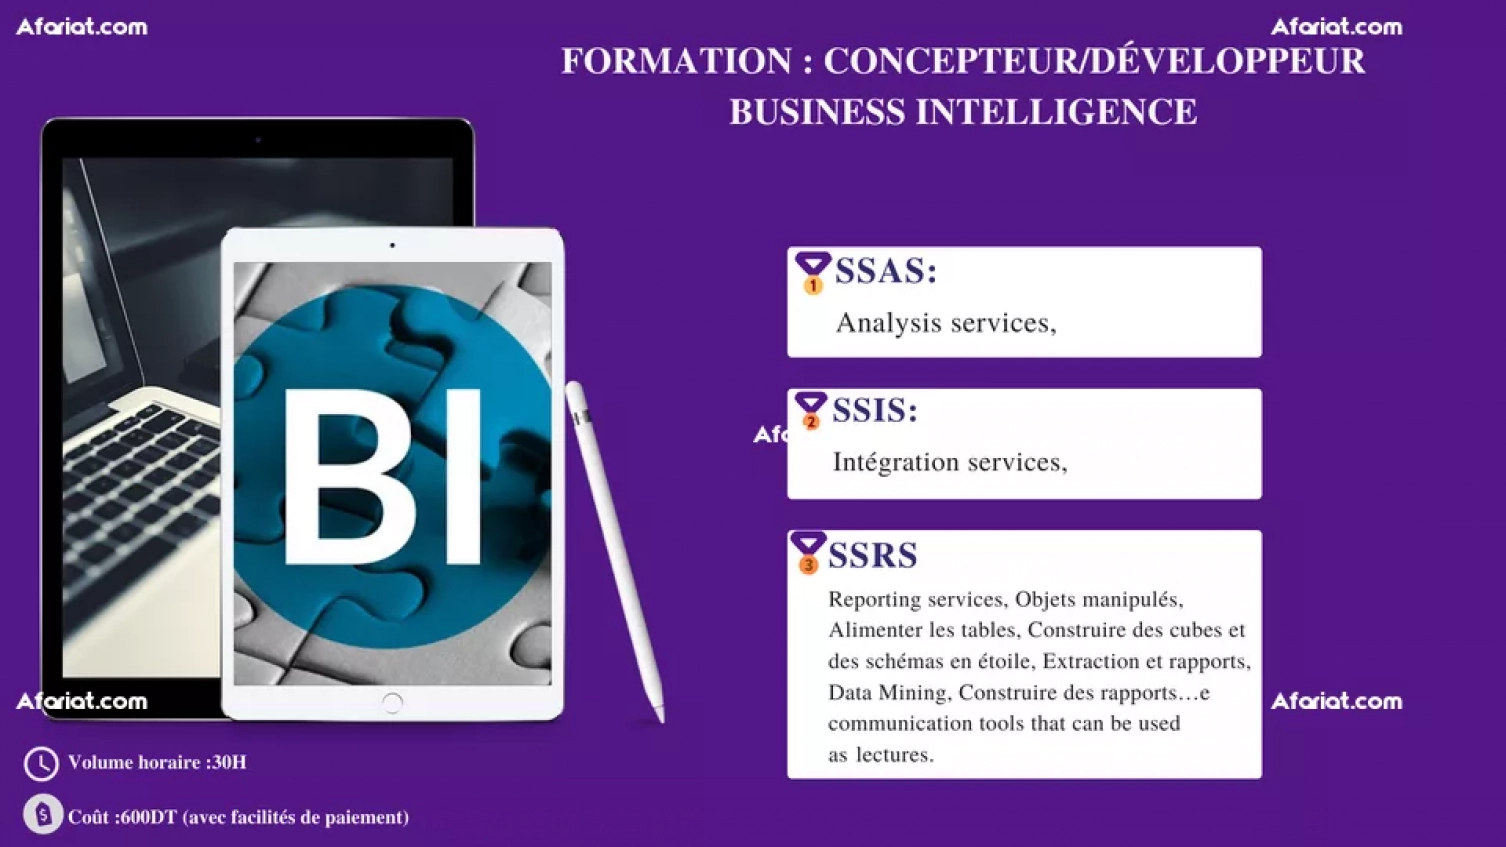 Formation business intelligence msbi : ssis,ssas,ssrs